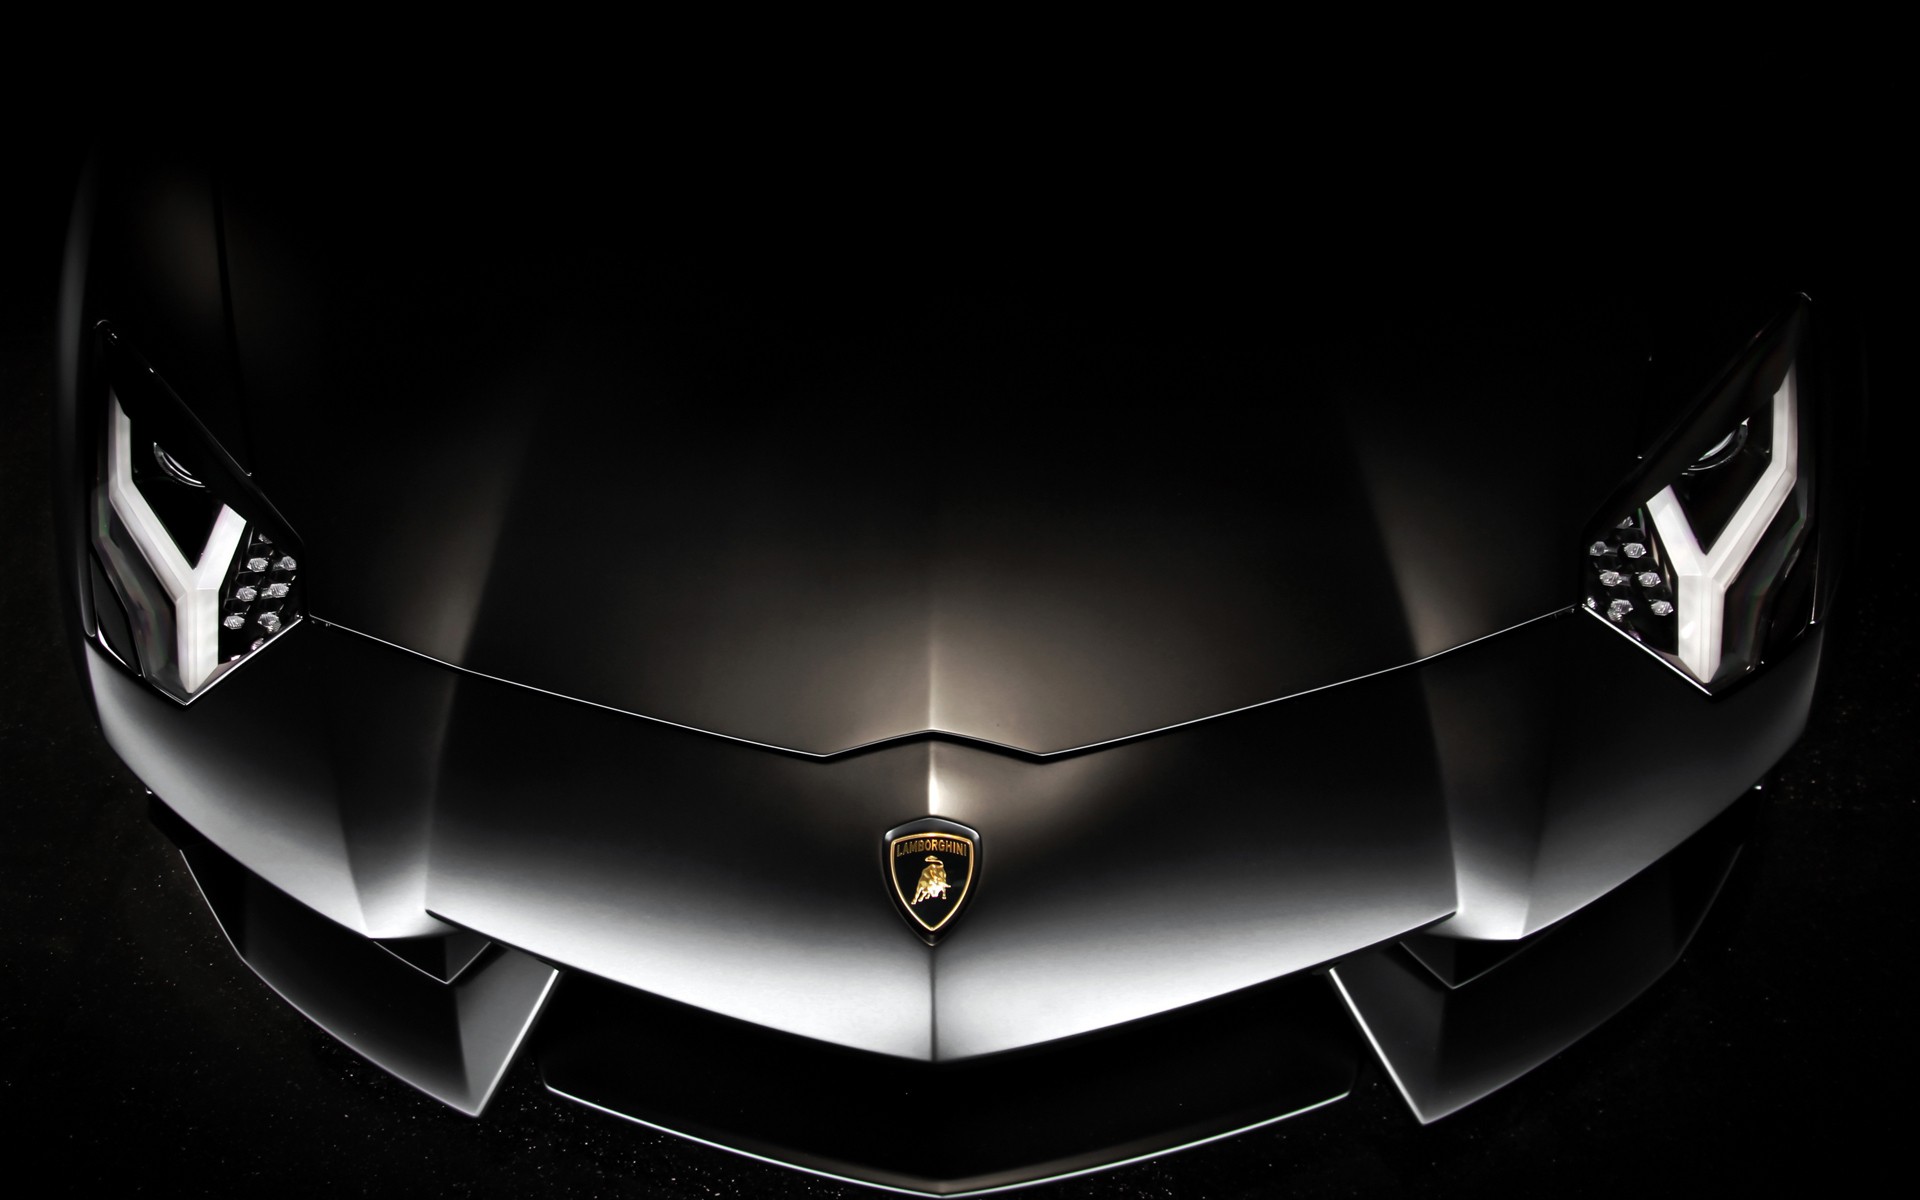  Black Lamborghini Aventador Bonnet desktop PC and Mac wallpaper